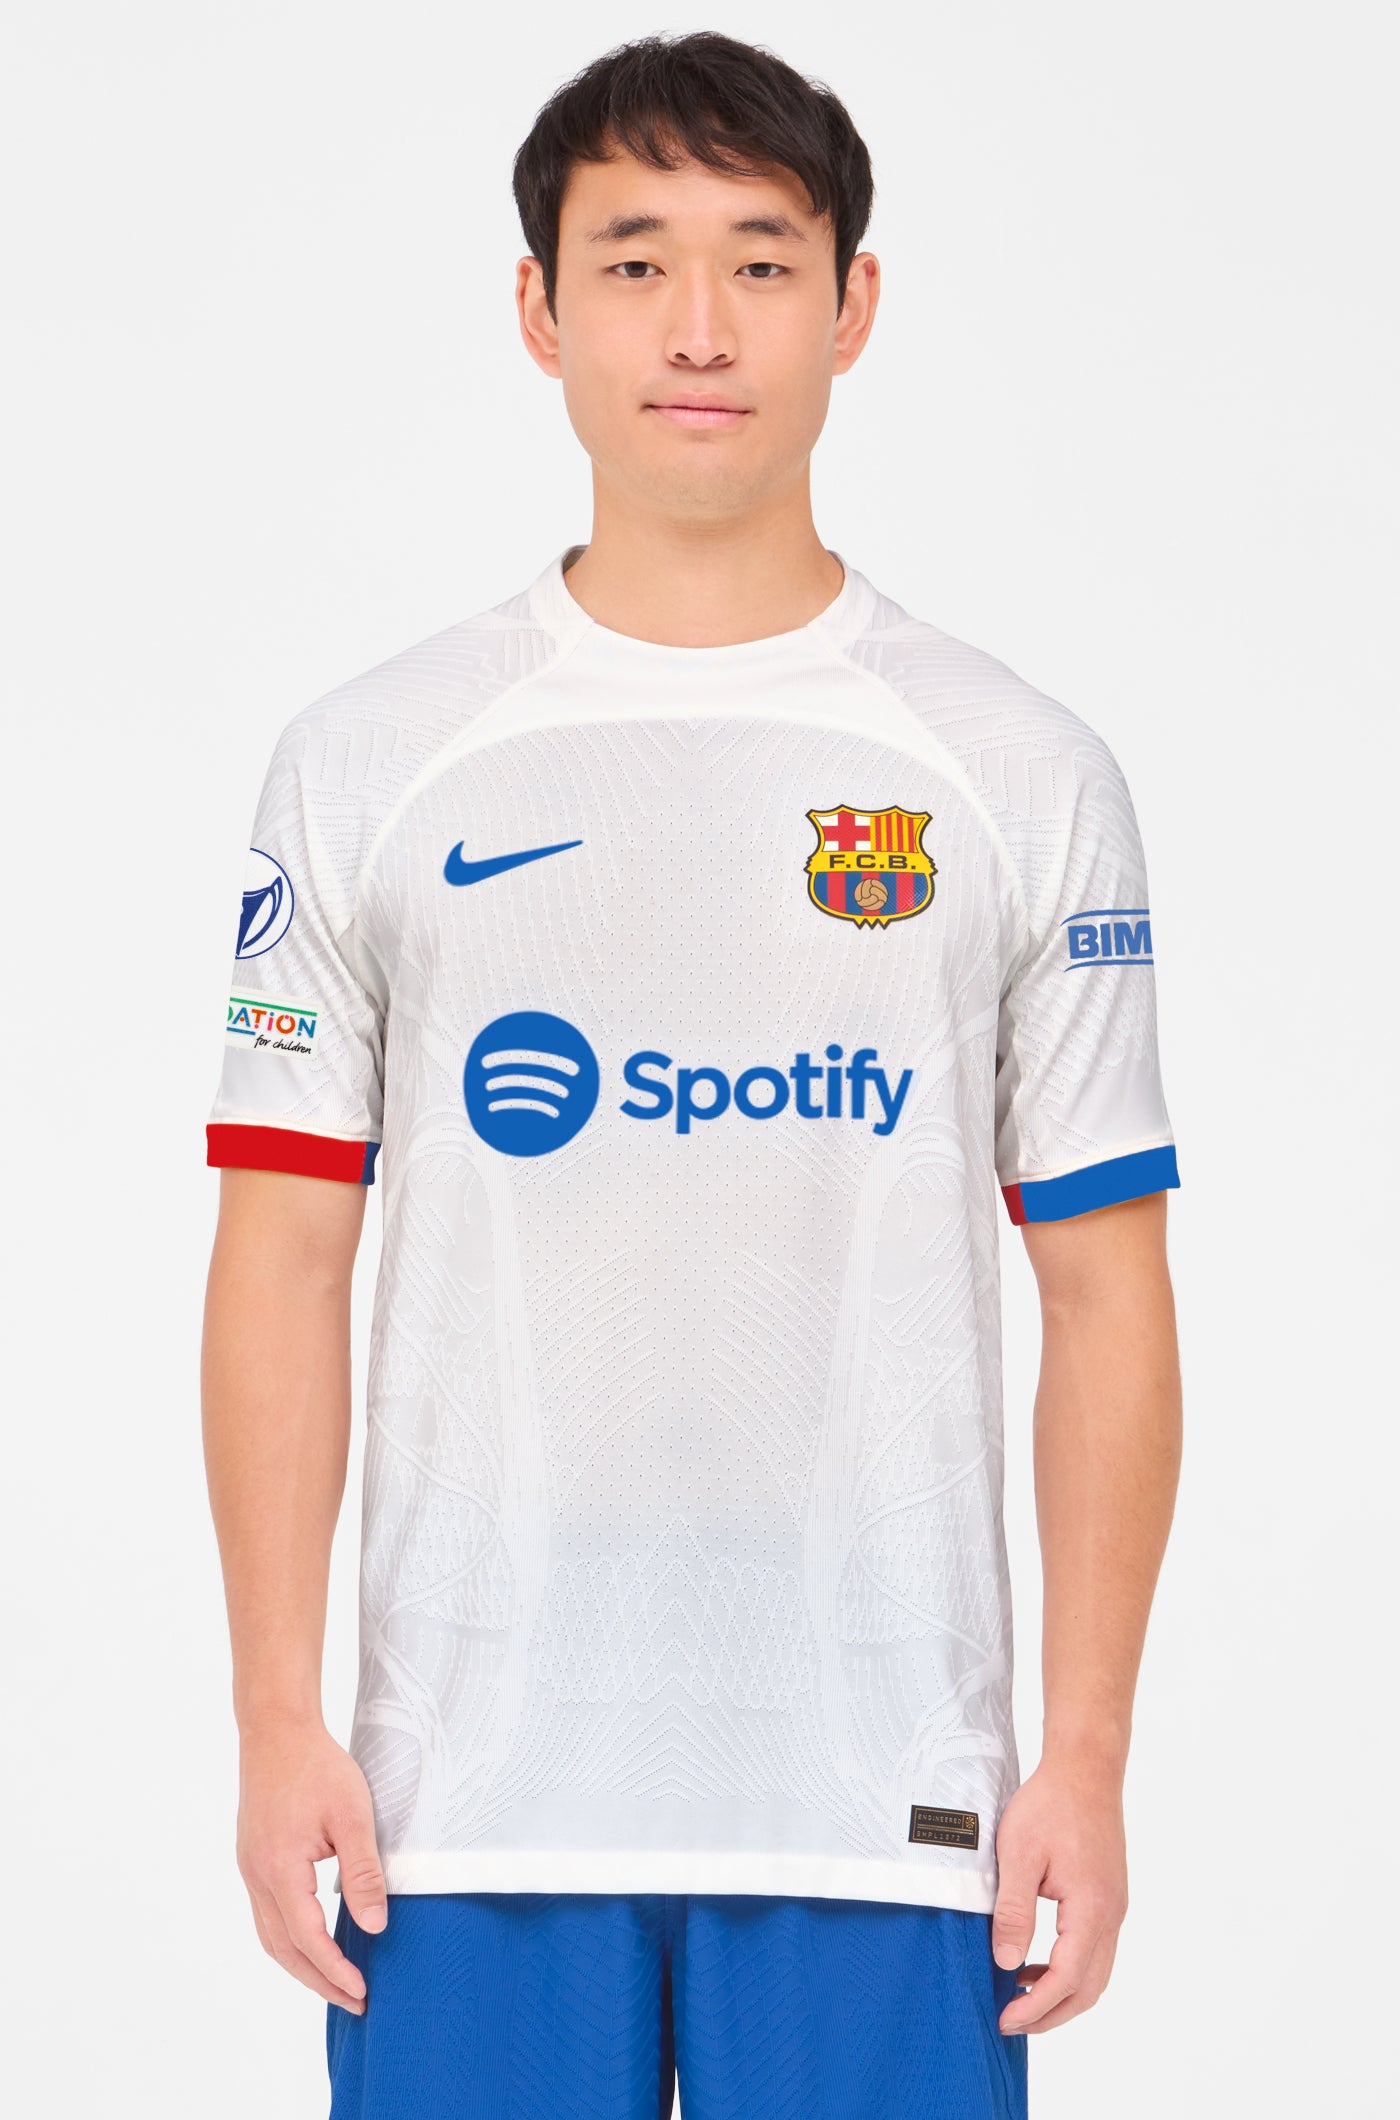 UWCL FC Barcelona away shirt 23/24 Player's Edition - JANA